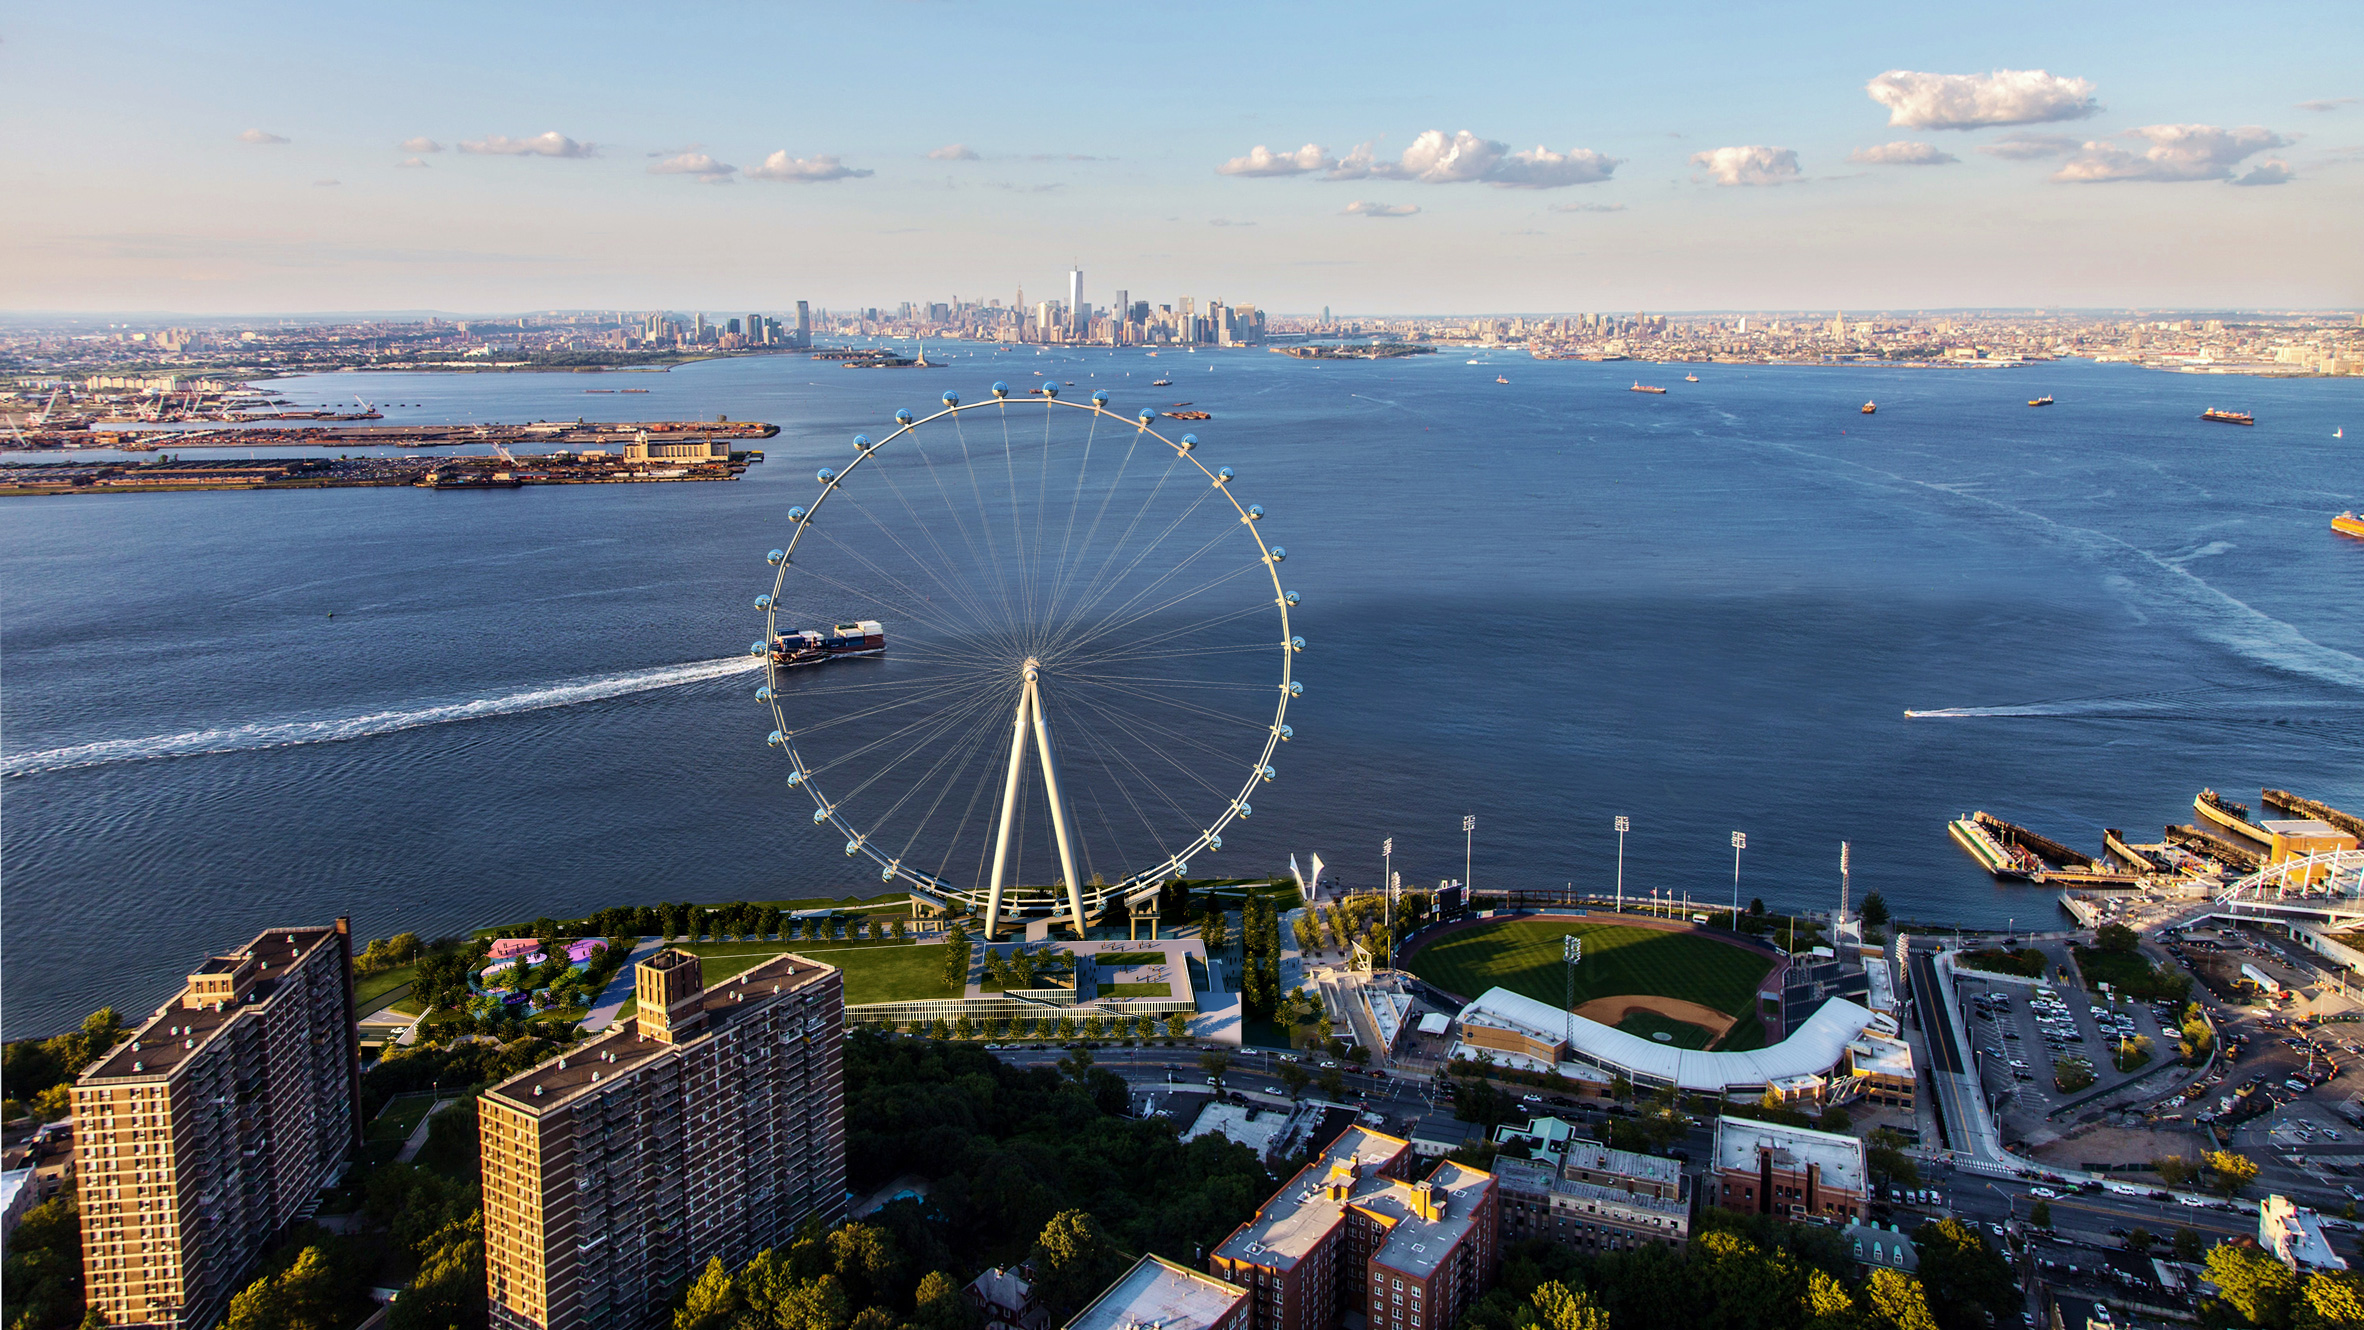 New York Wheel developers abandon plans for Staten Island attraction.